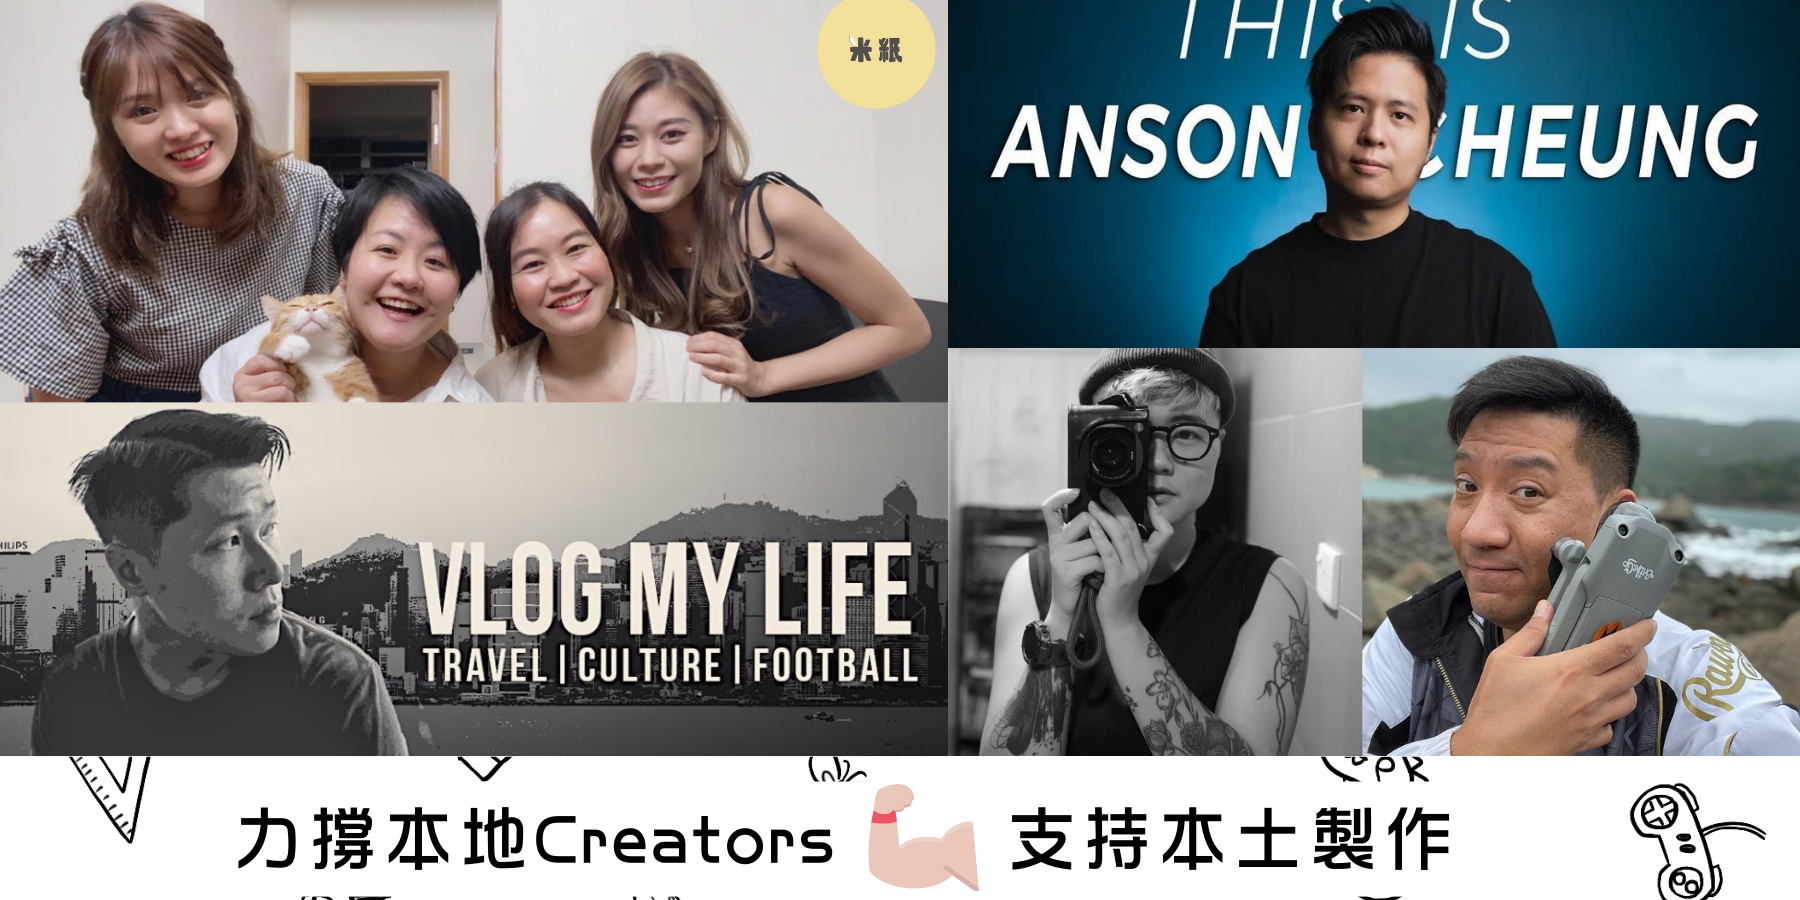 【Support Hong Kong Local Creators!】